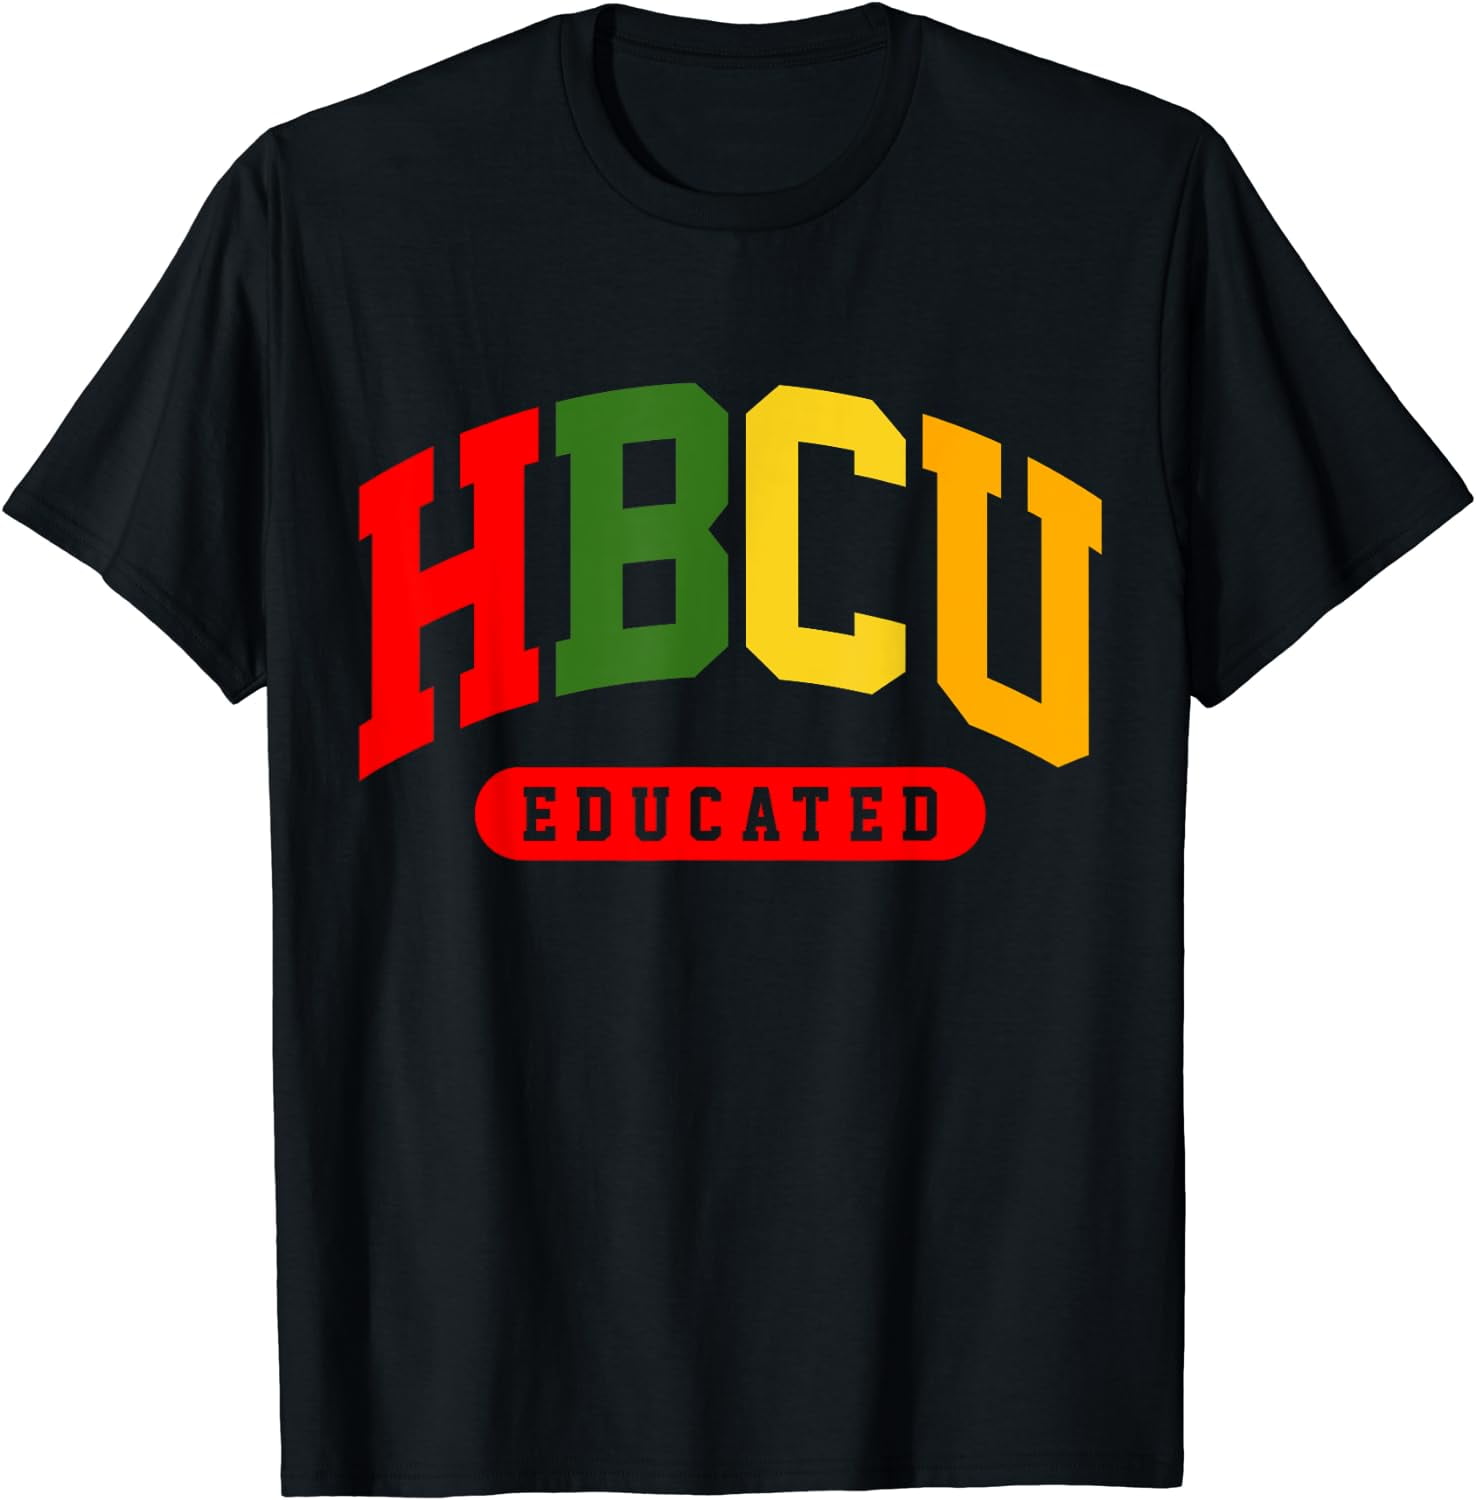 HBCU Historically Black college Educated Alumni Apparel T-Shirt ...